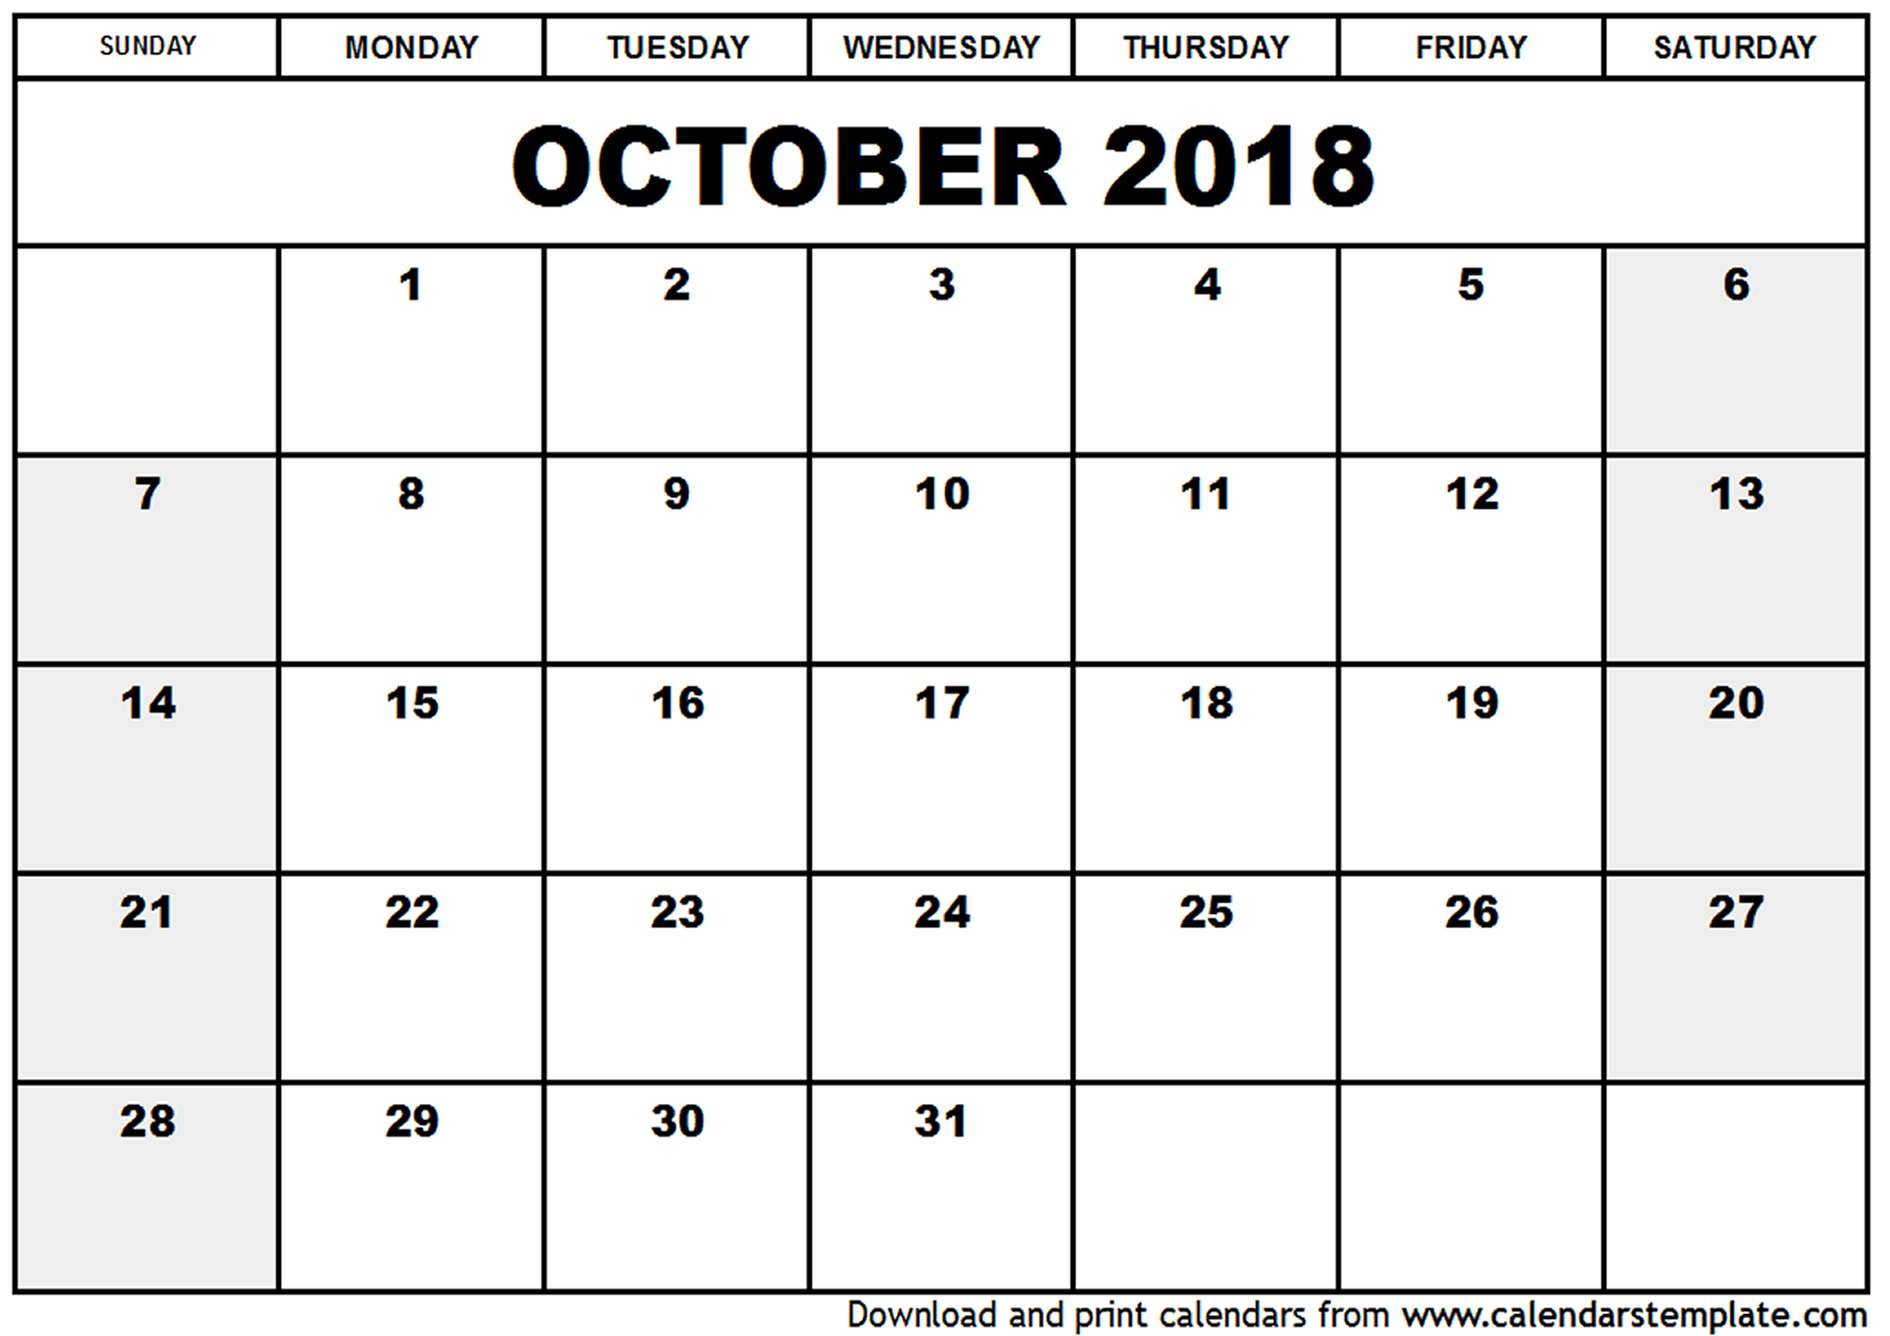 October 2018 Calendar Template